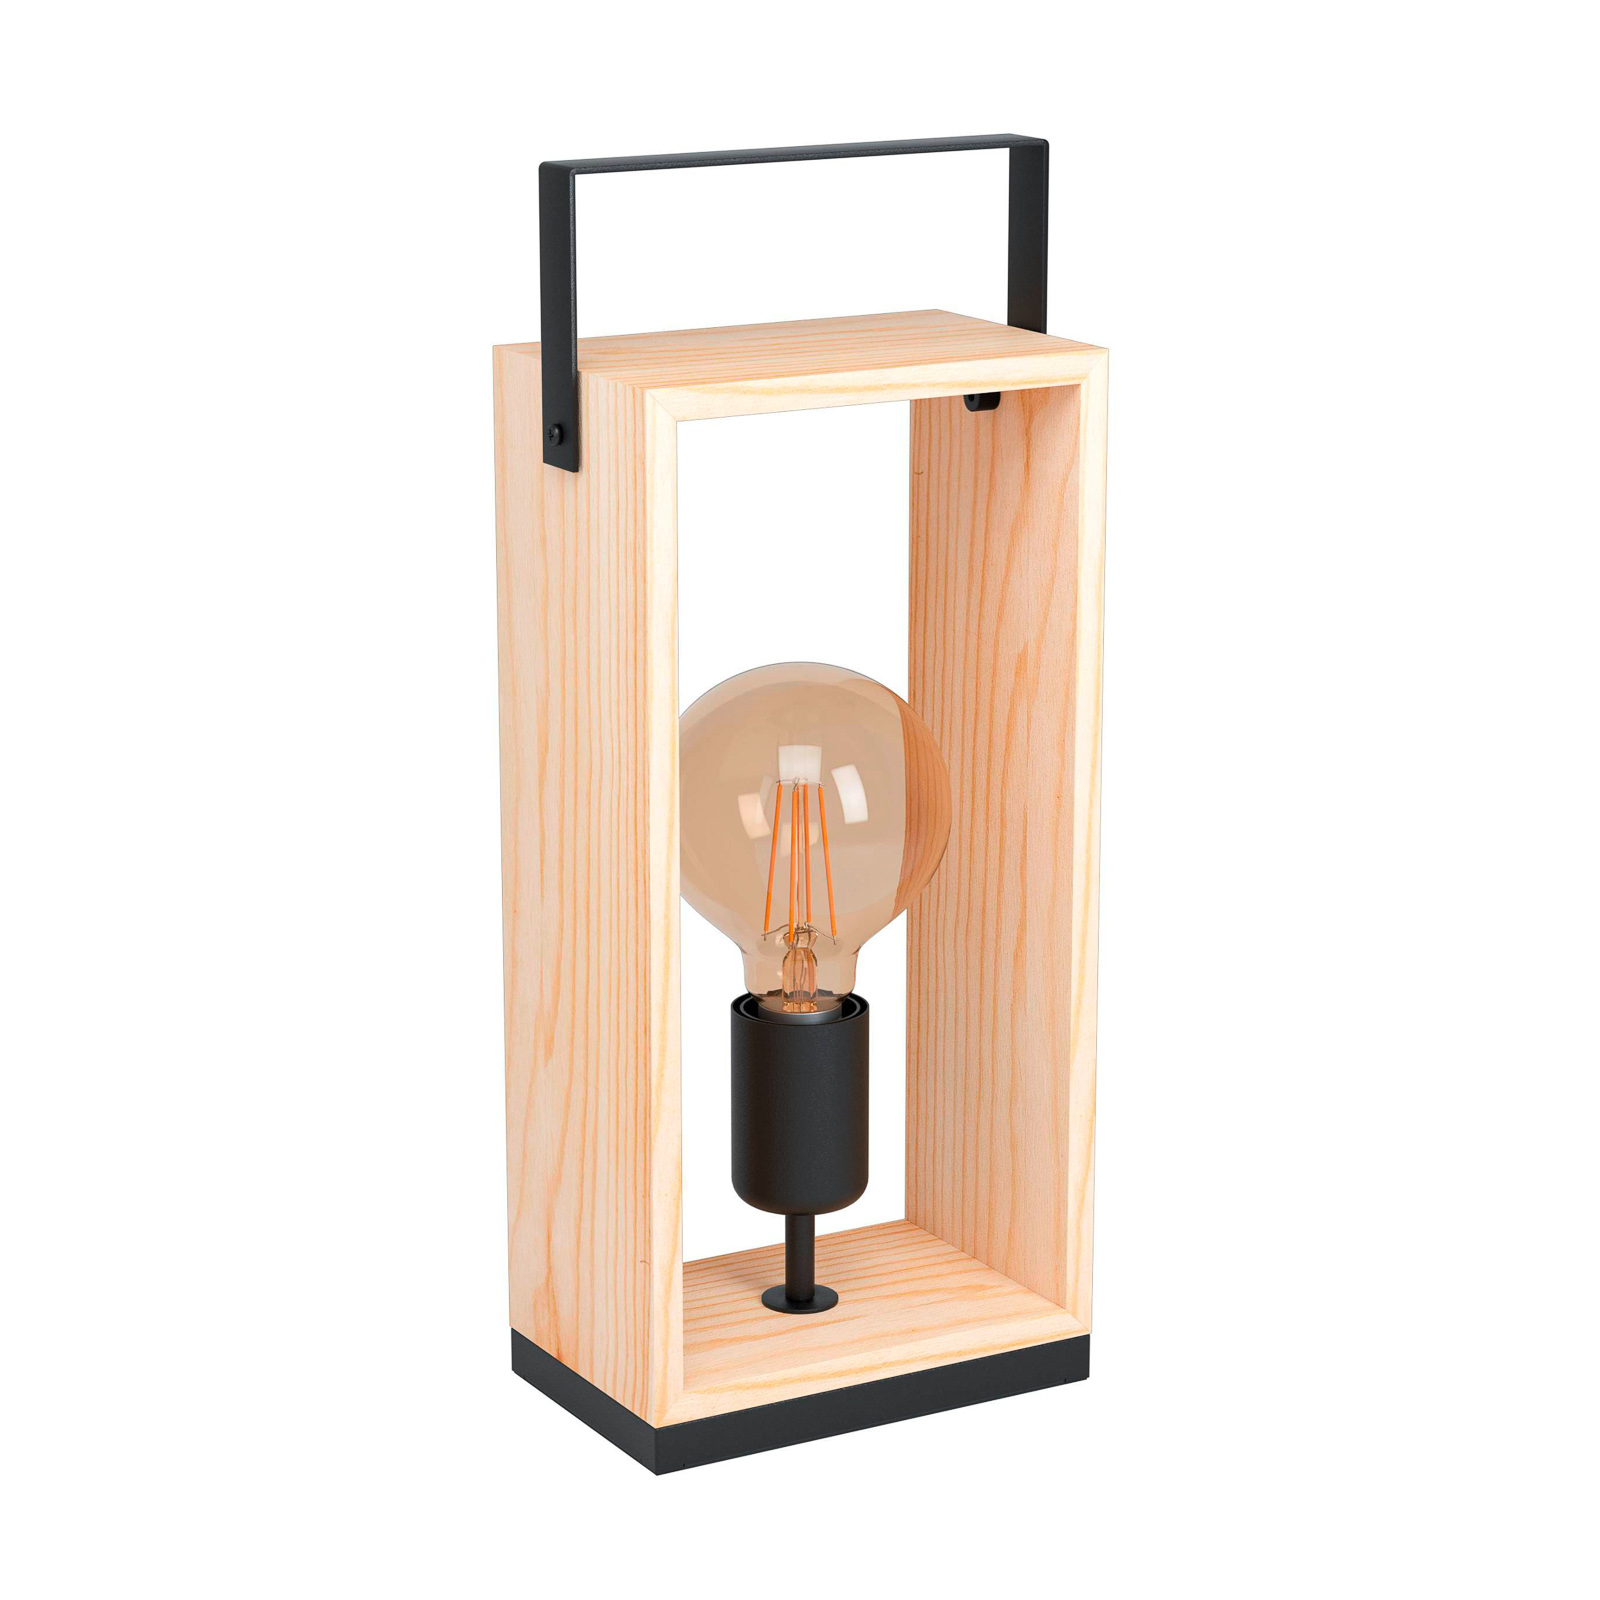 Famborough table lamp with light wood frame